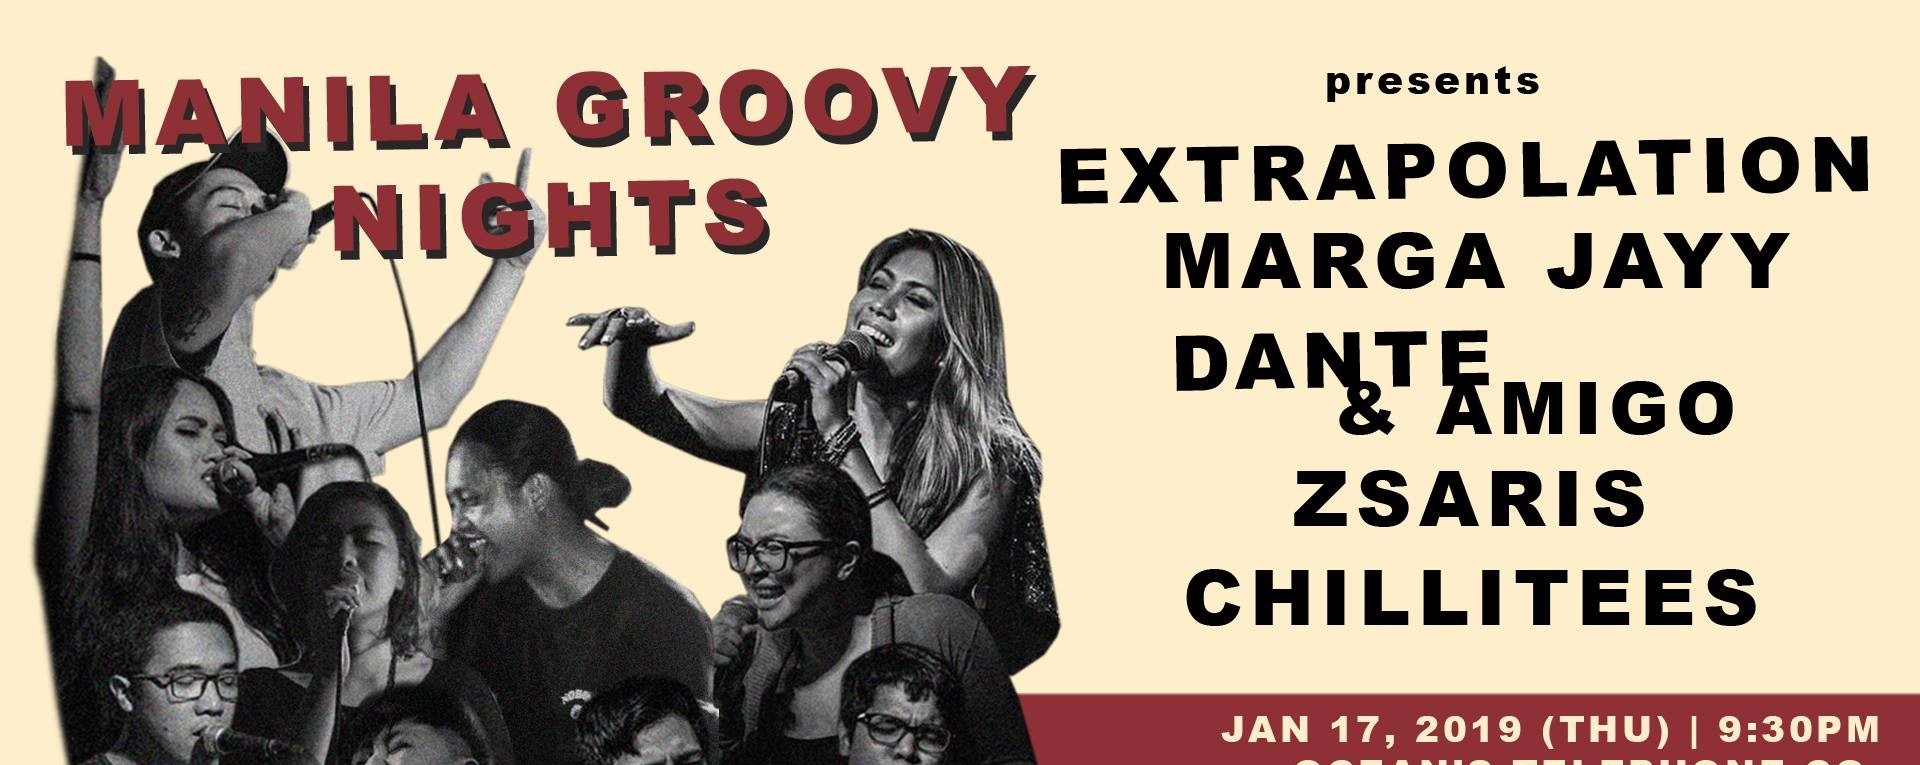 Manila Groovy Nights